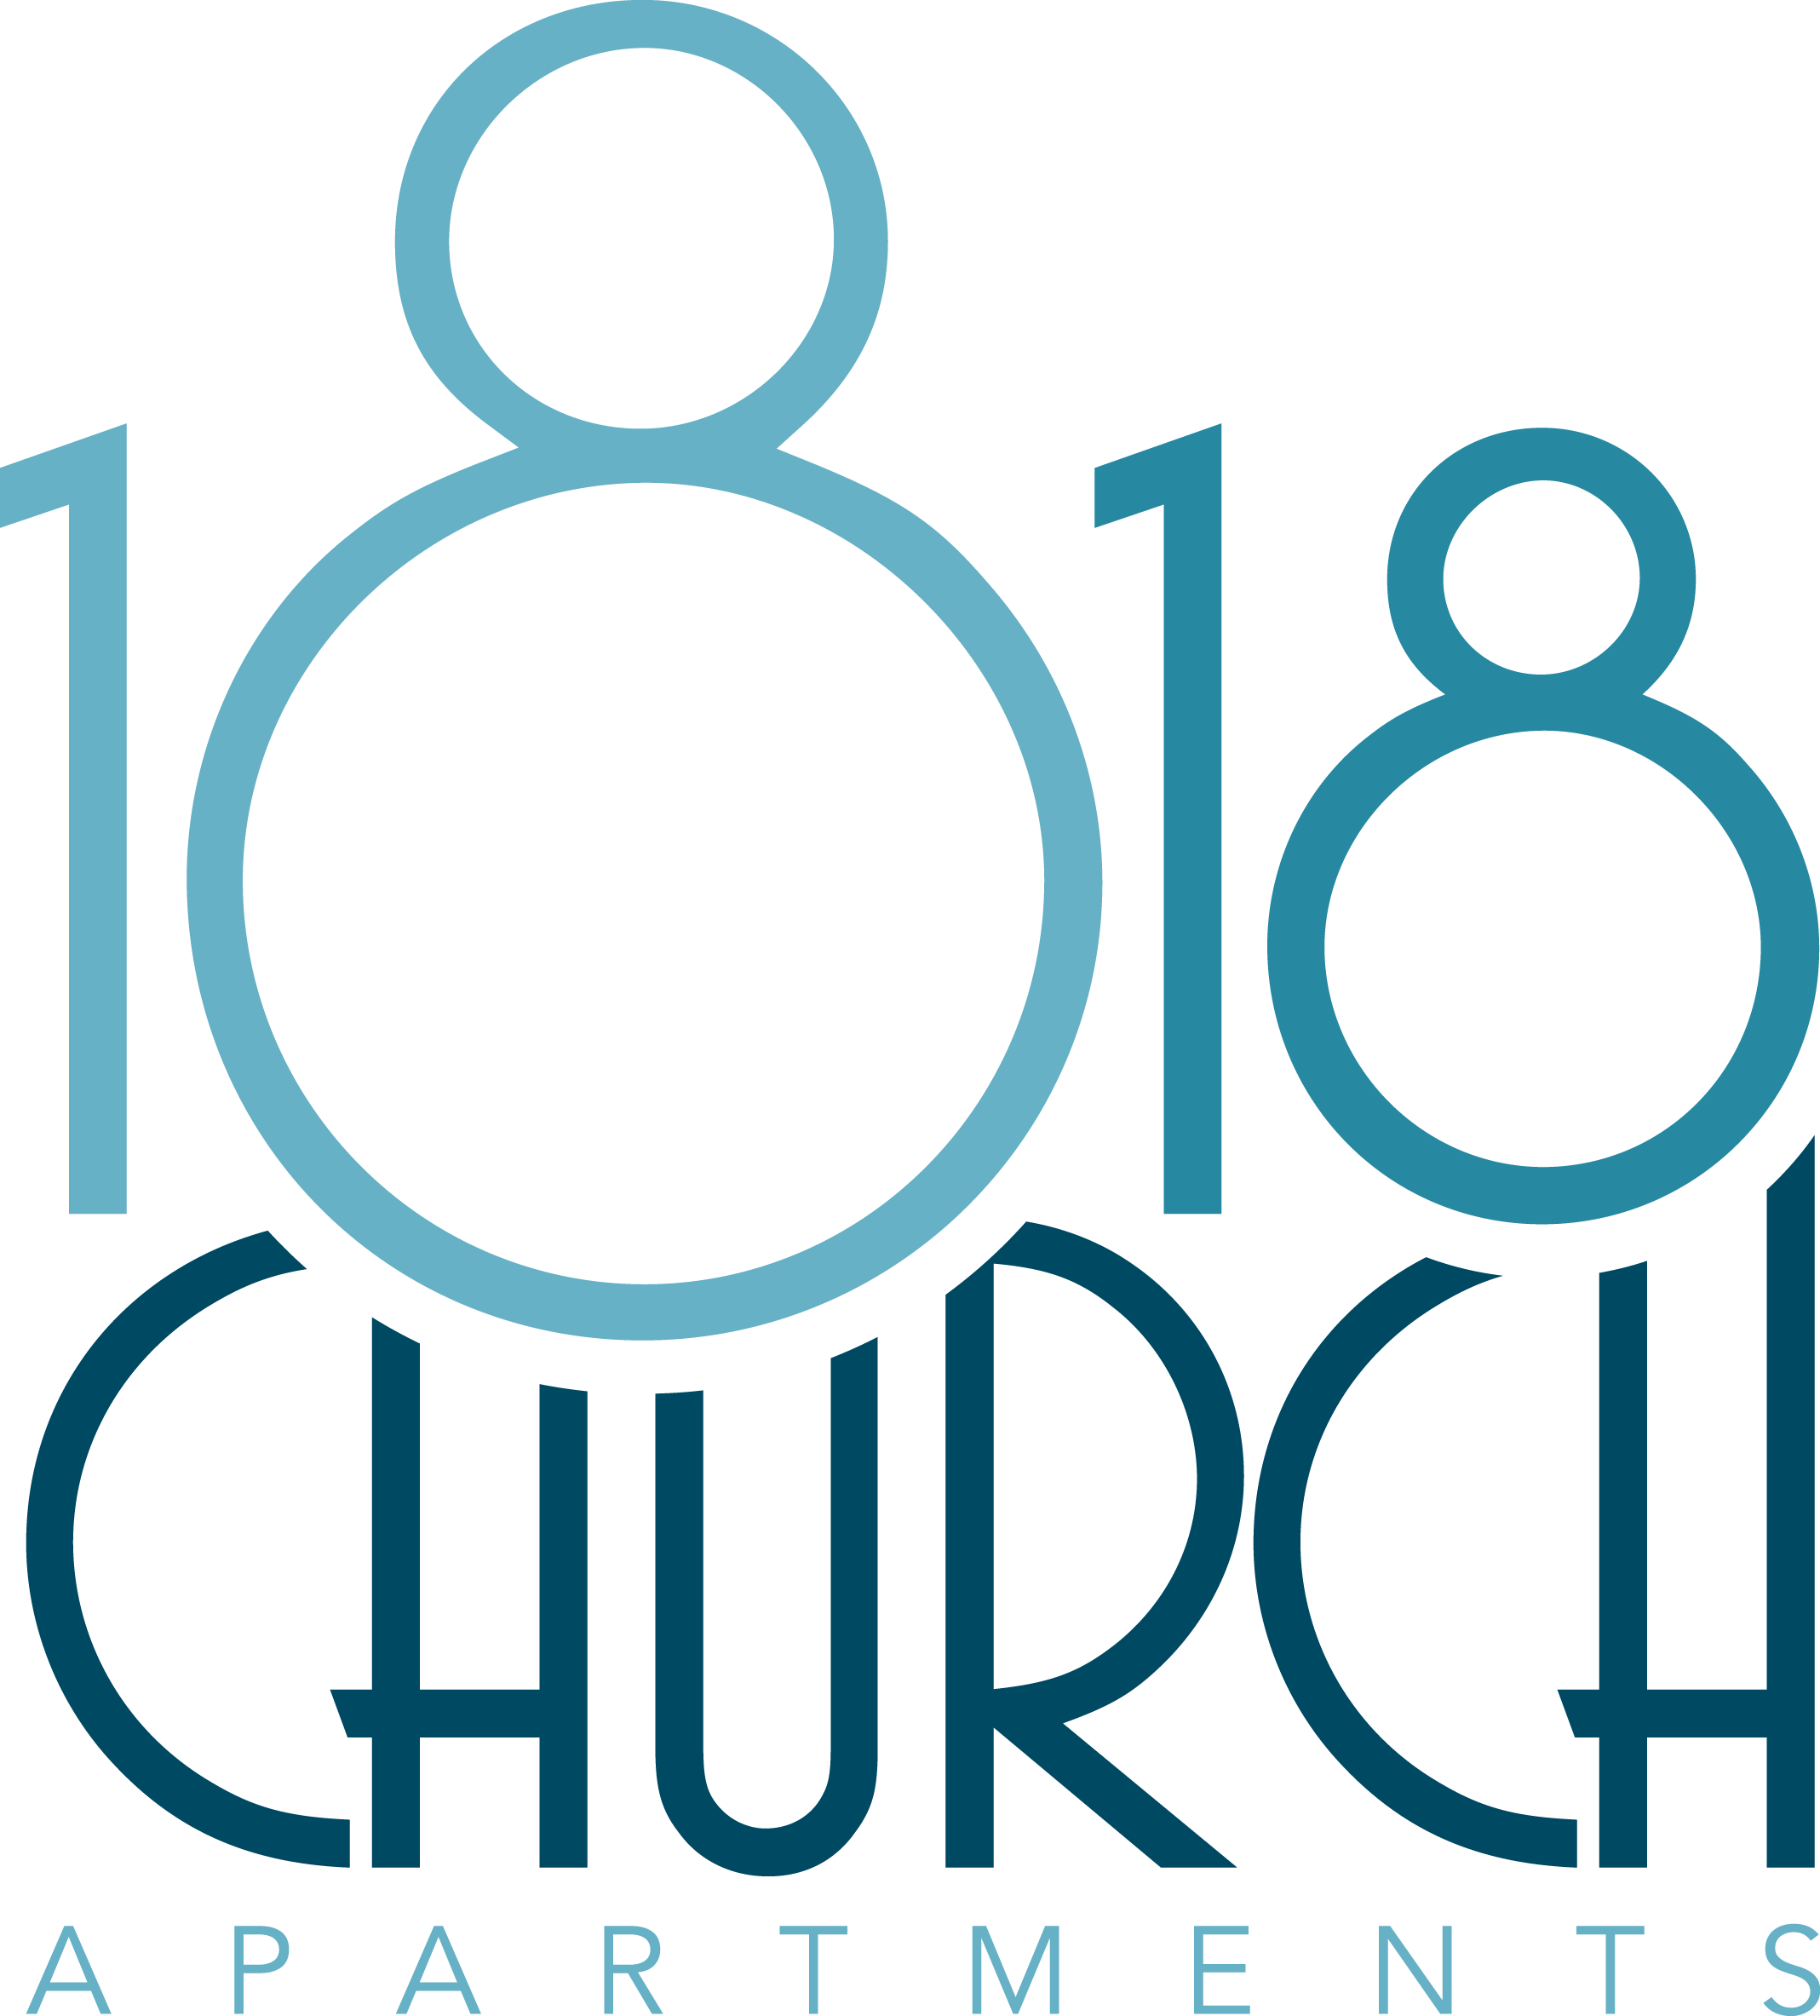 EPM111115-1818 Church Logo-apartments-Final - Copy.png